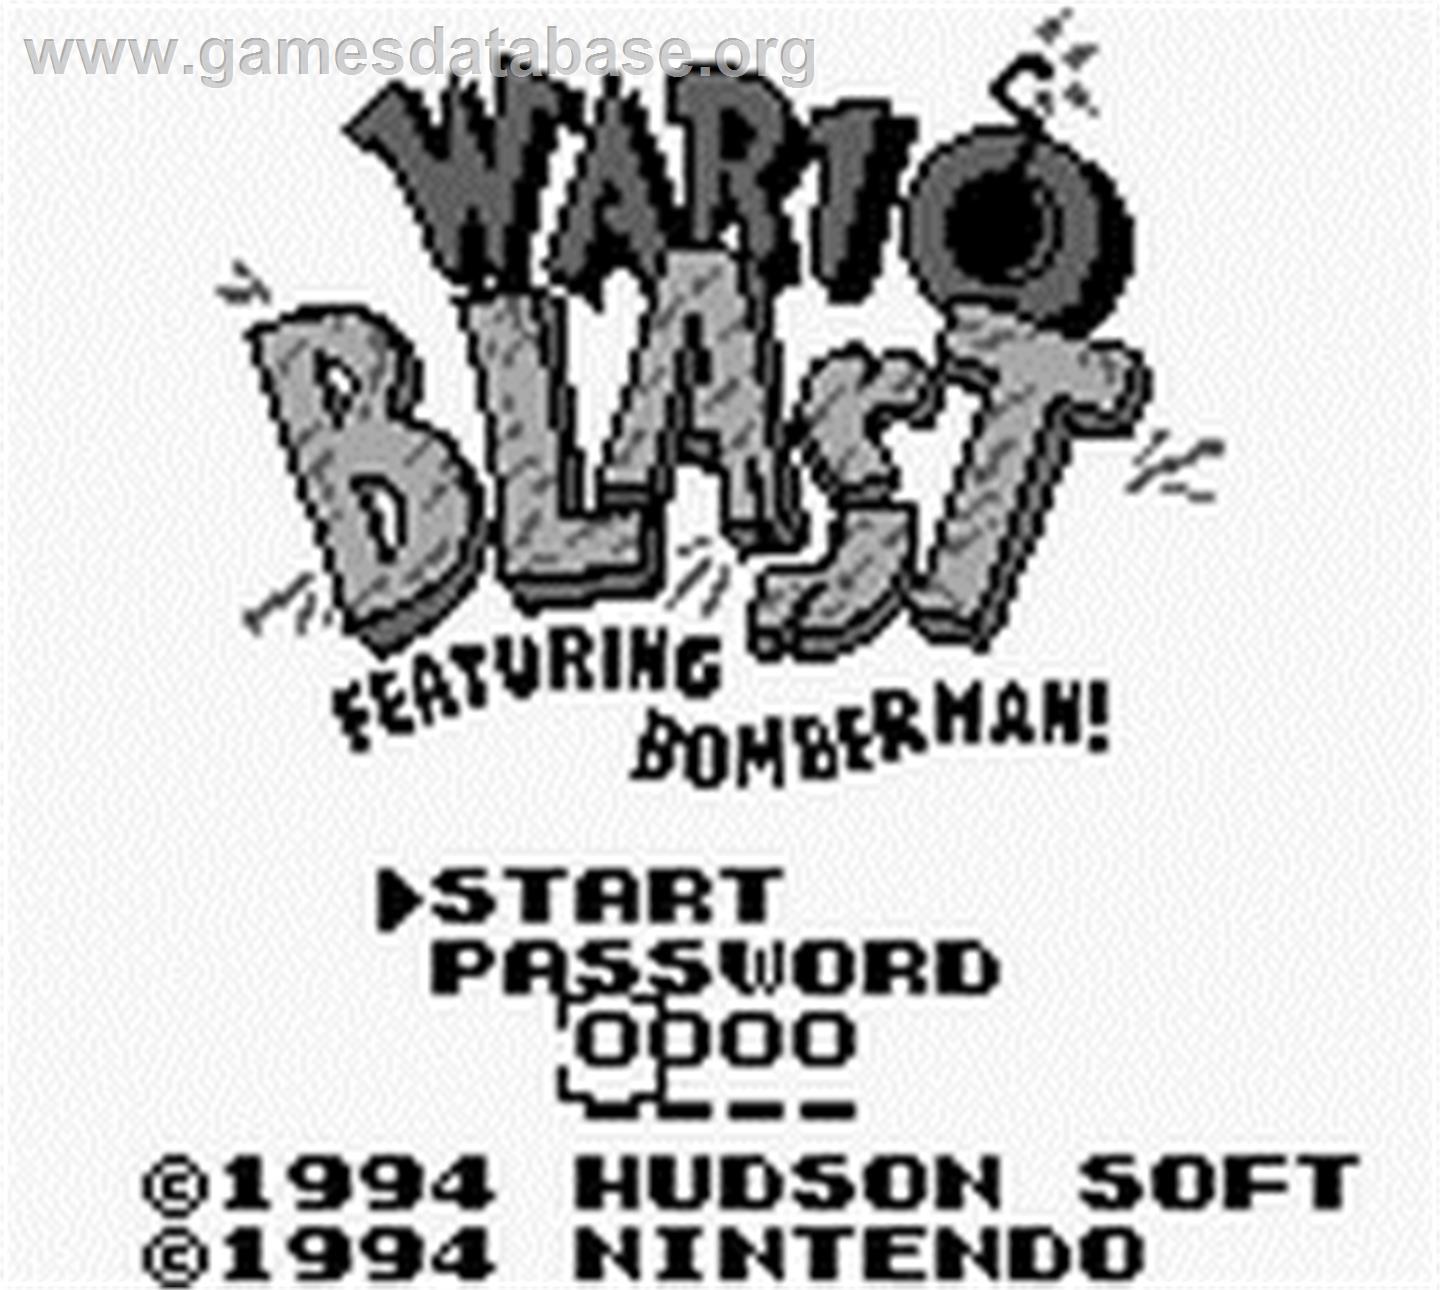 Wario Blast Featuring Bomberman - Nintendo Game Boy - Artwork - Title Screen